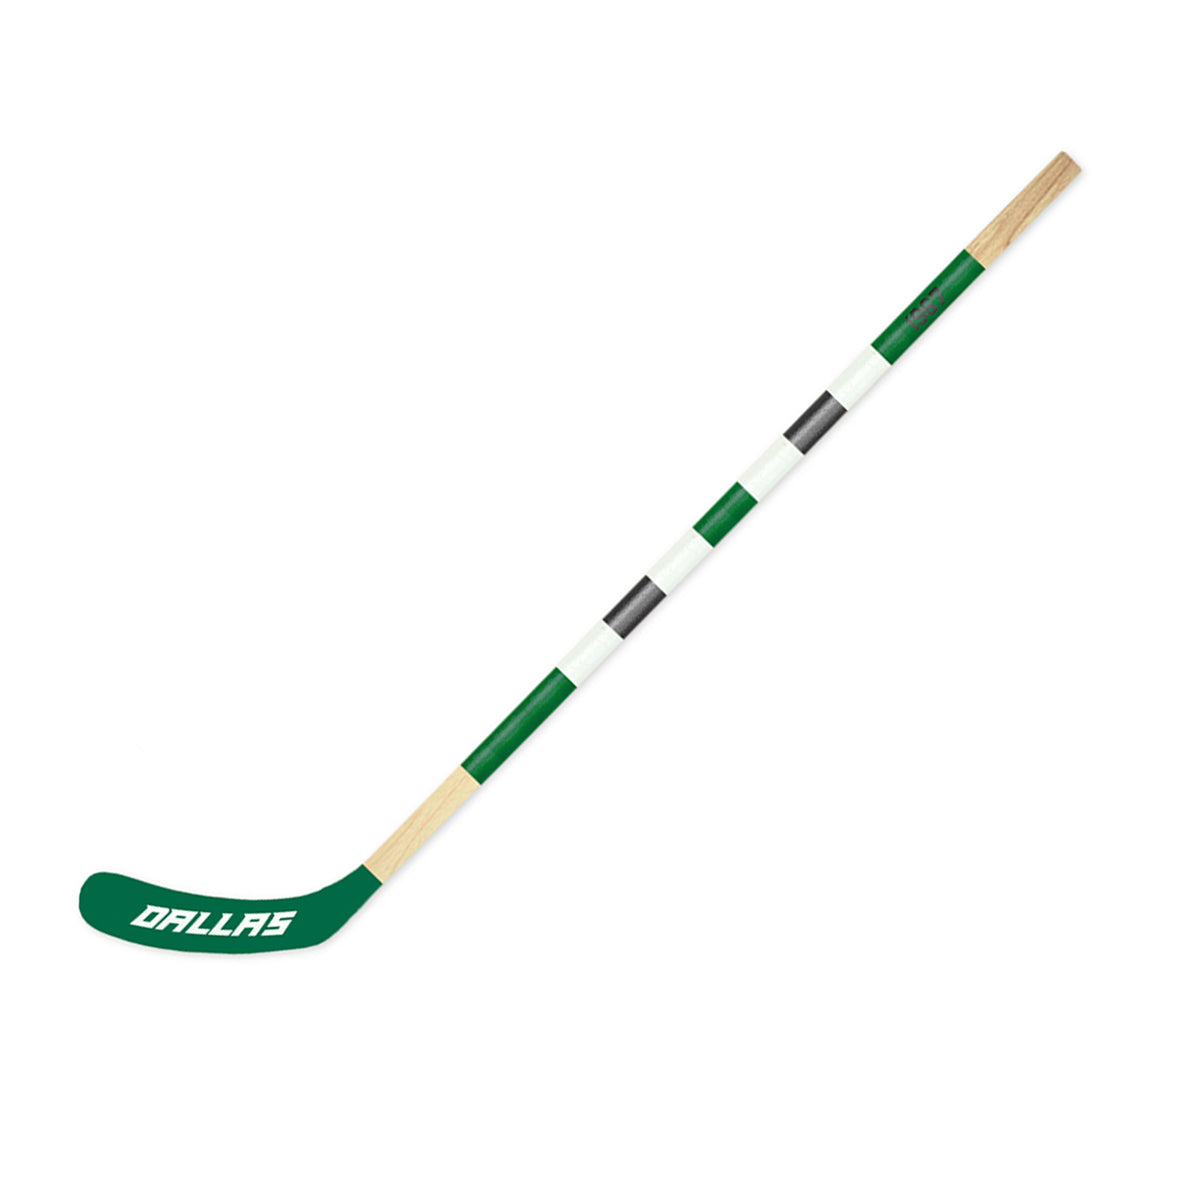 Dallas Mitchell Hockey Stick